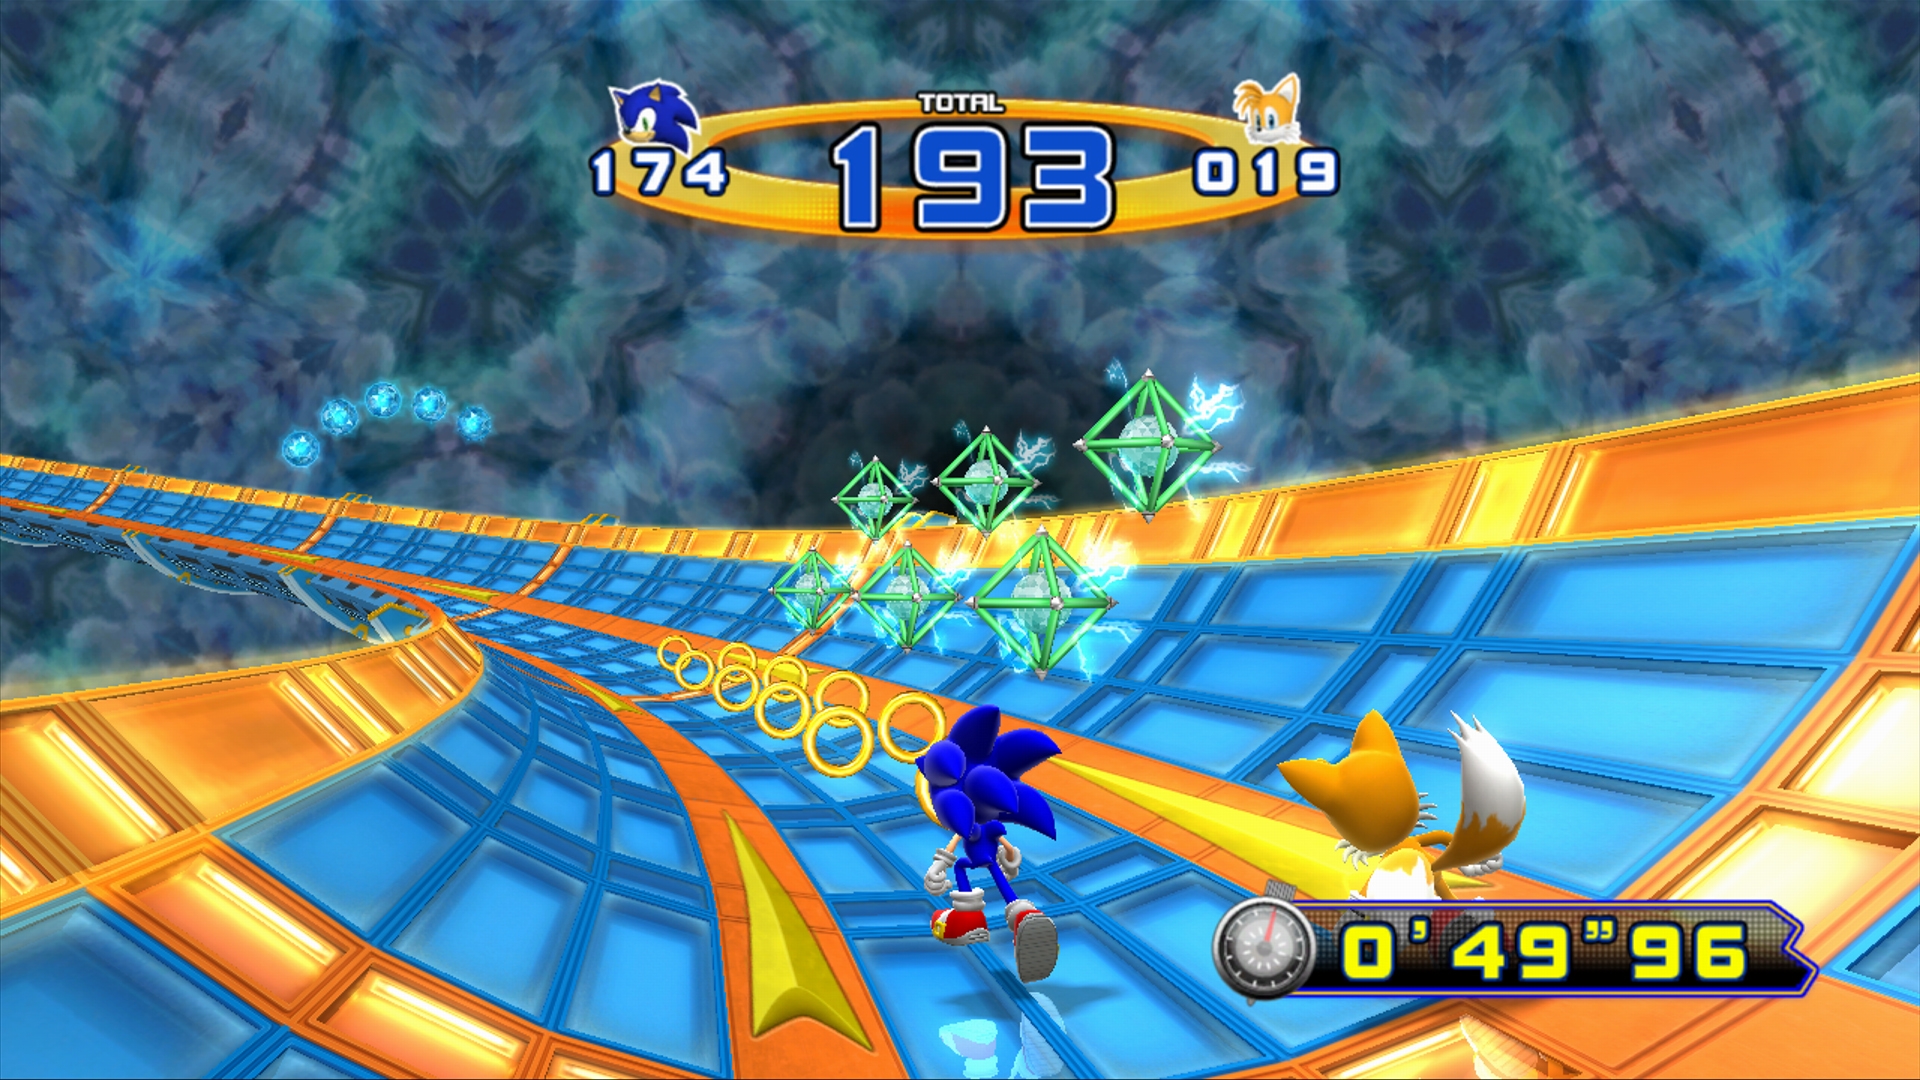 Amazoncom: Sonic the Hedgehog 4 Episode 1 Download